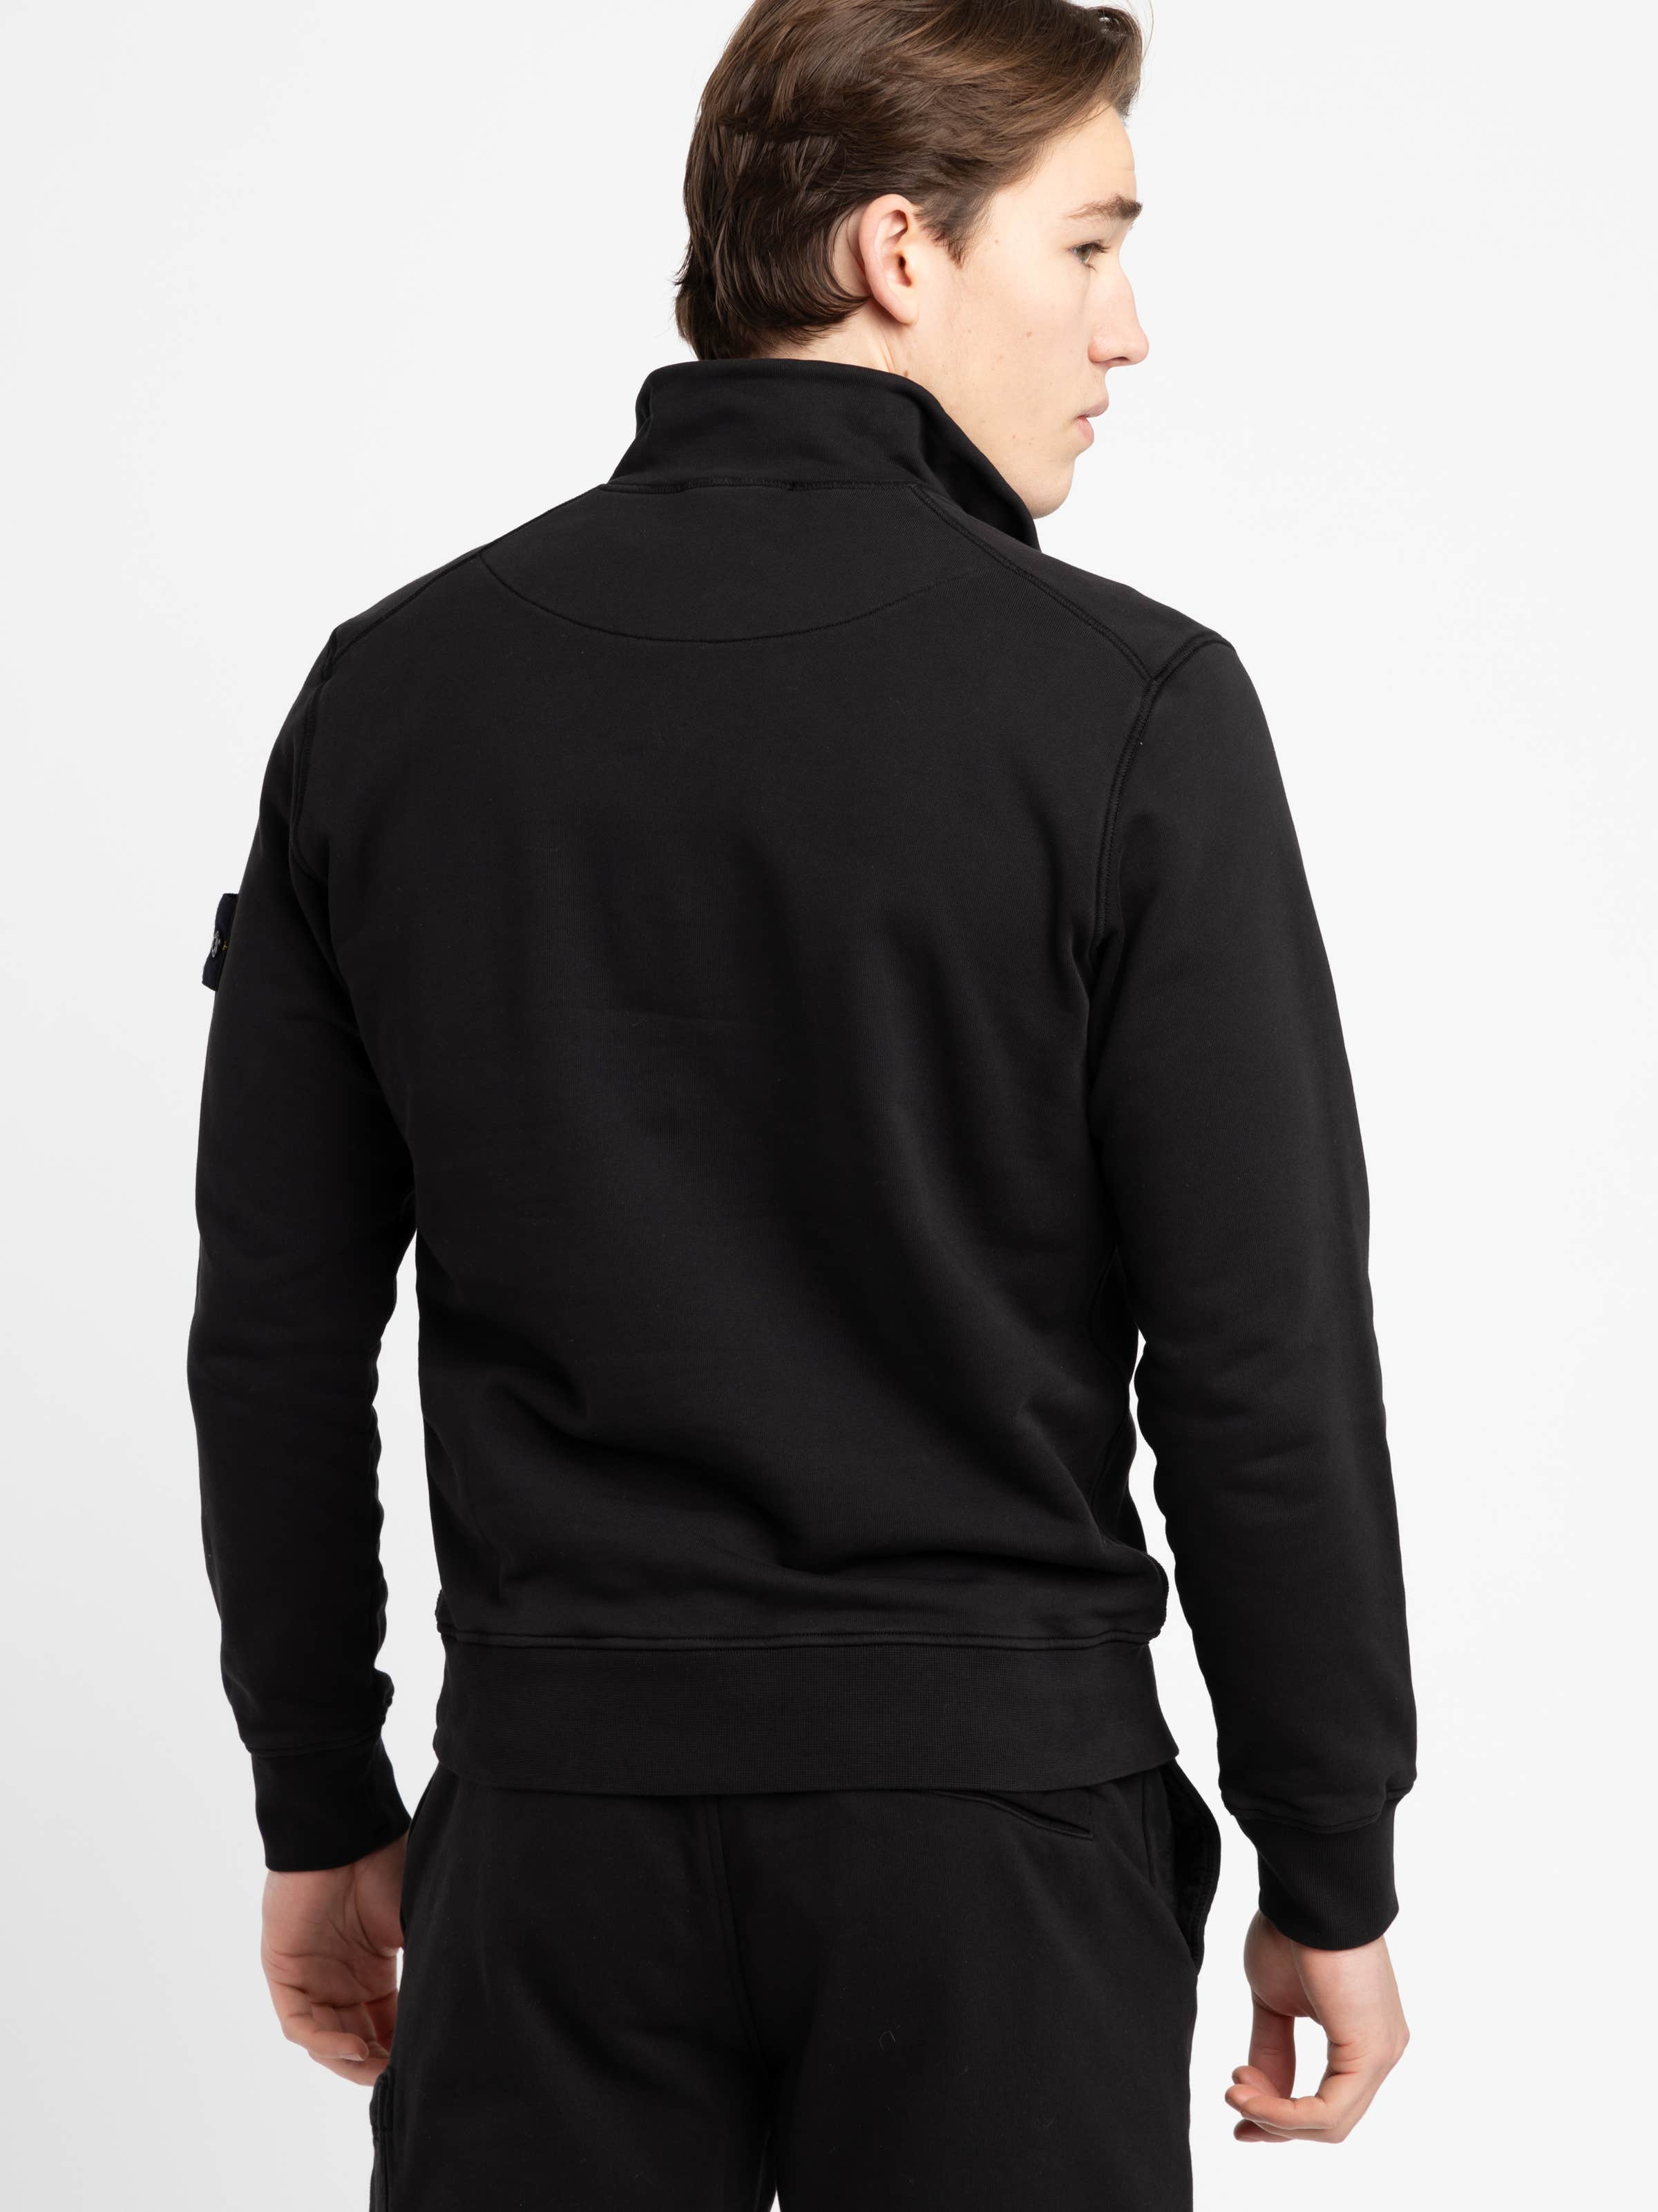 Black Cotton Quarter-Zip Sweater – The Helm Clothing